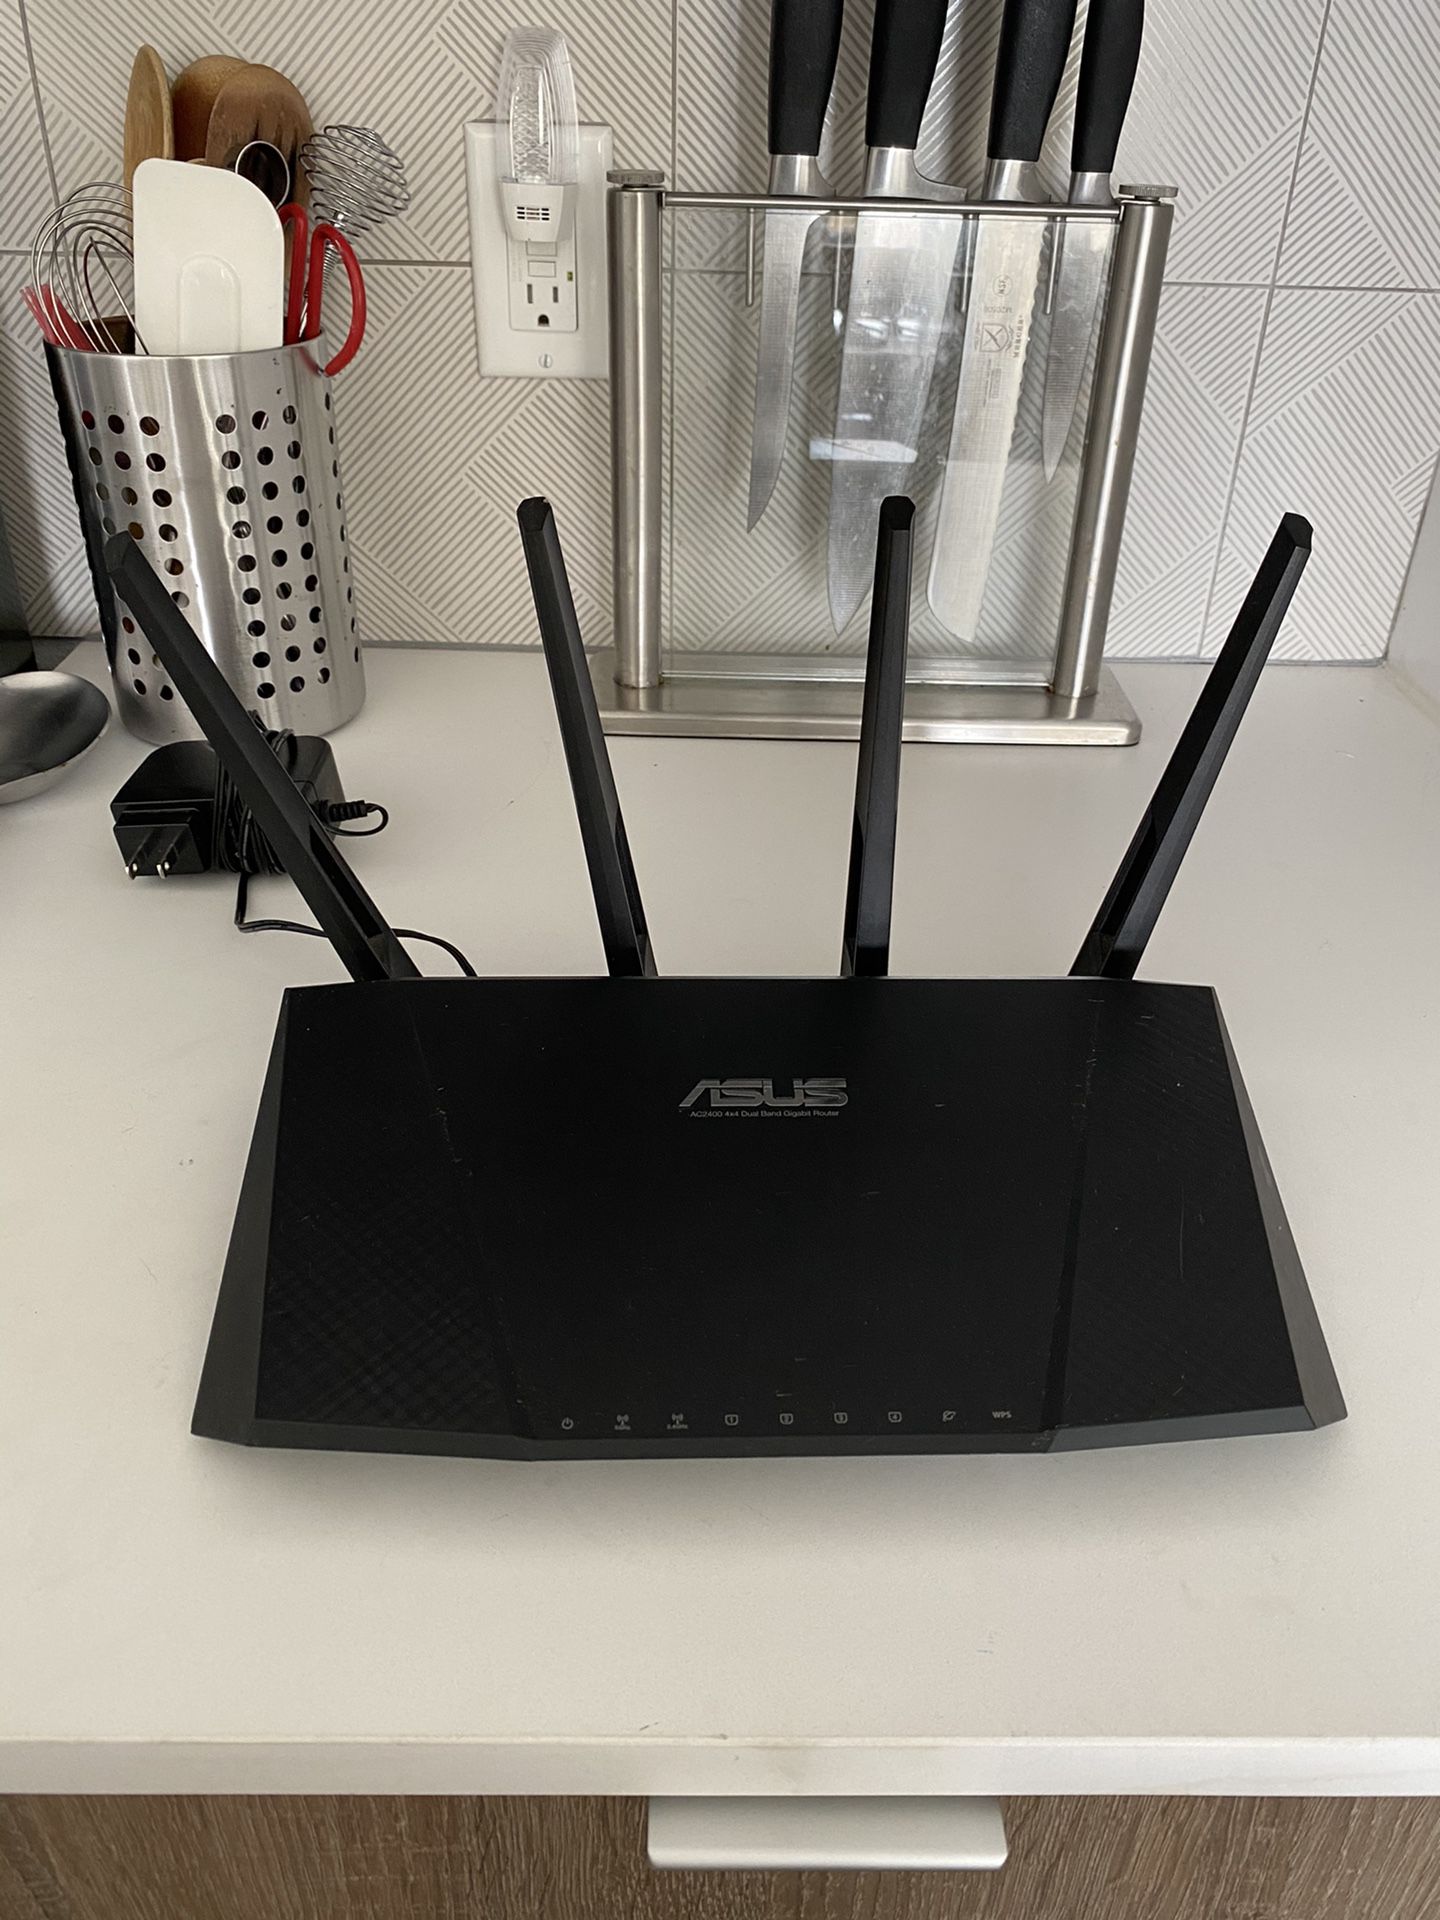 ASUS RT-AC87U Dual Band Gigabit WiFi Router